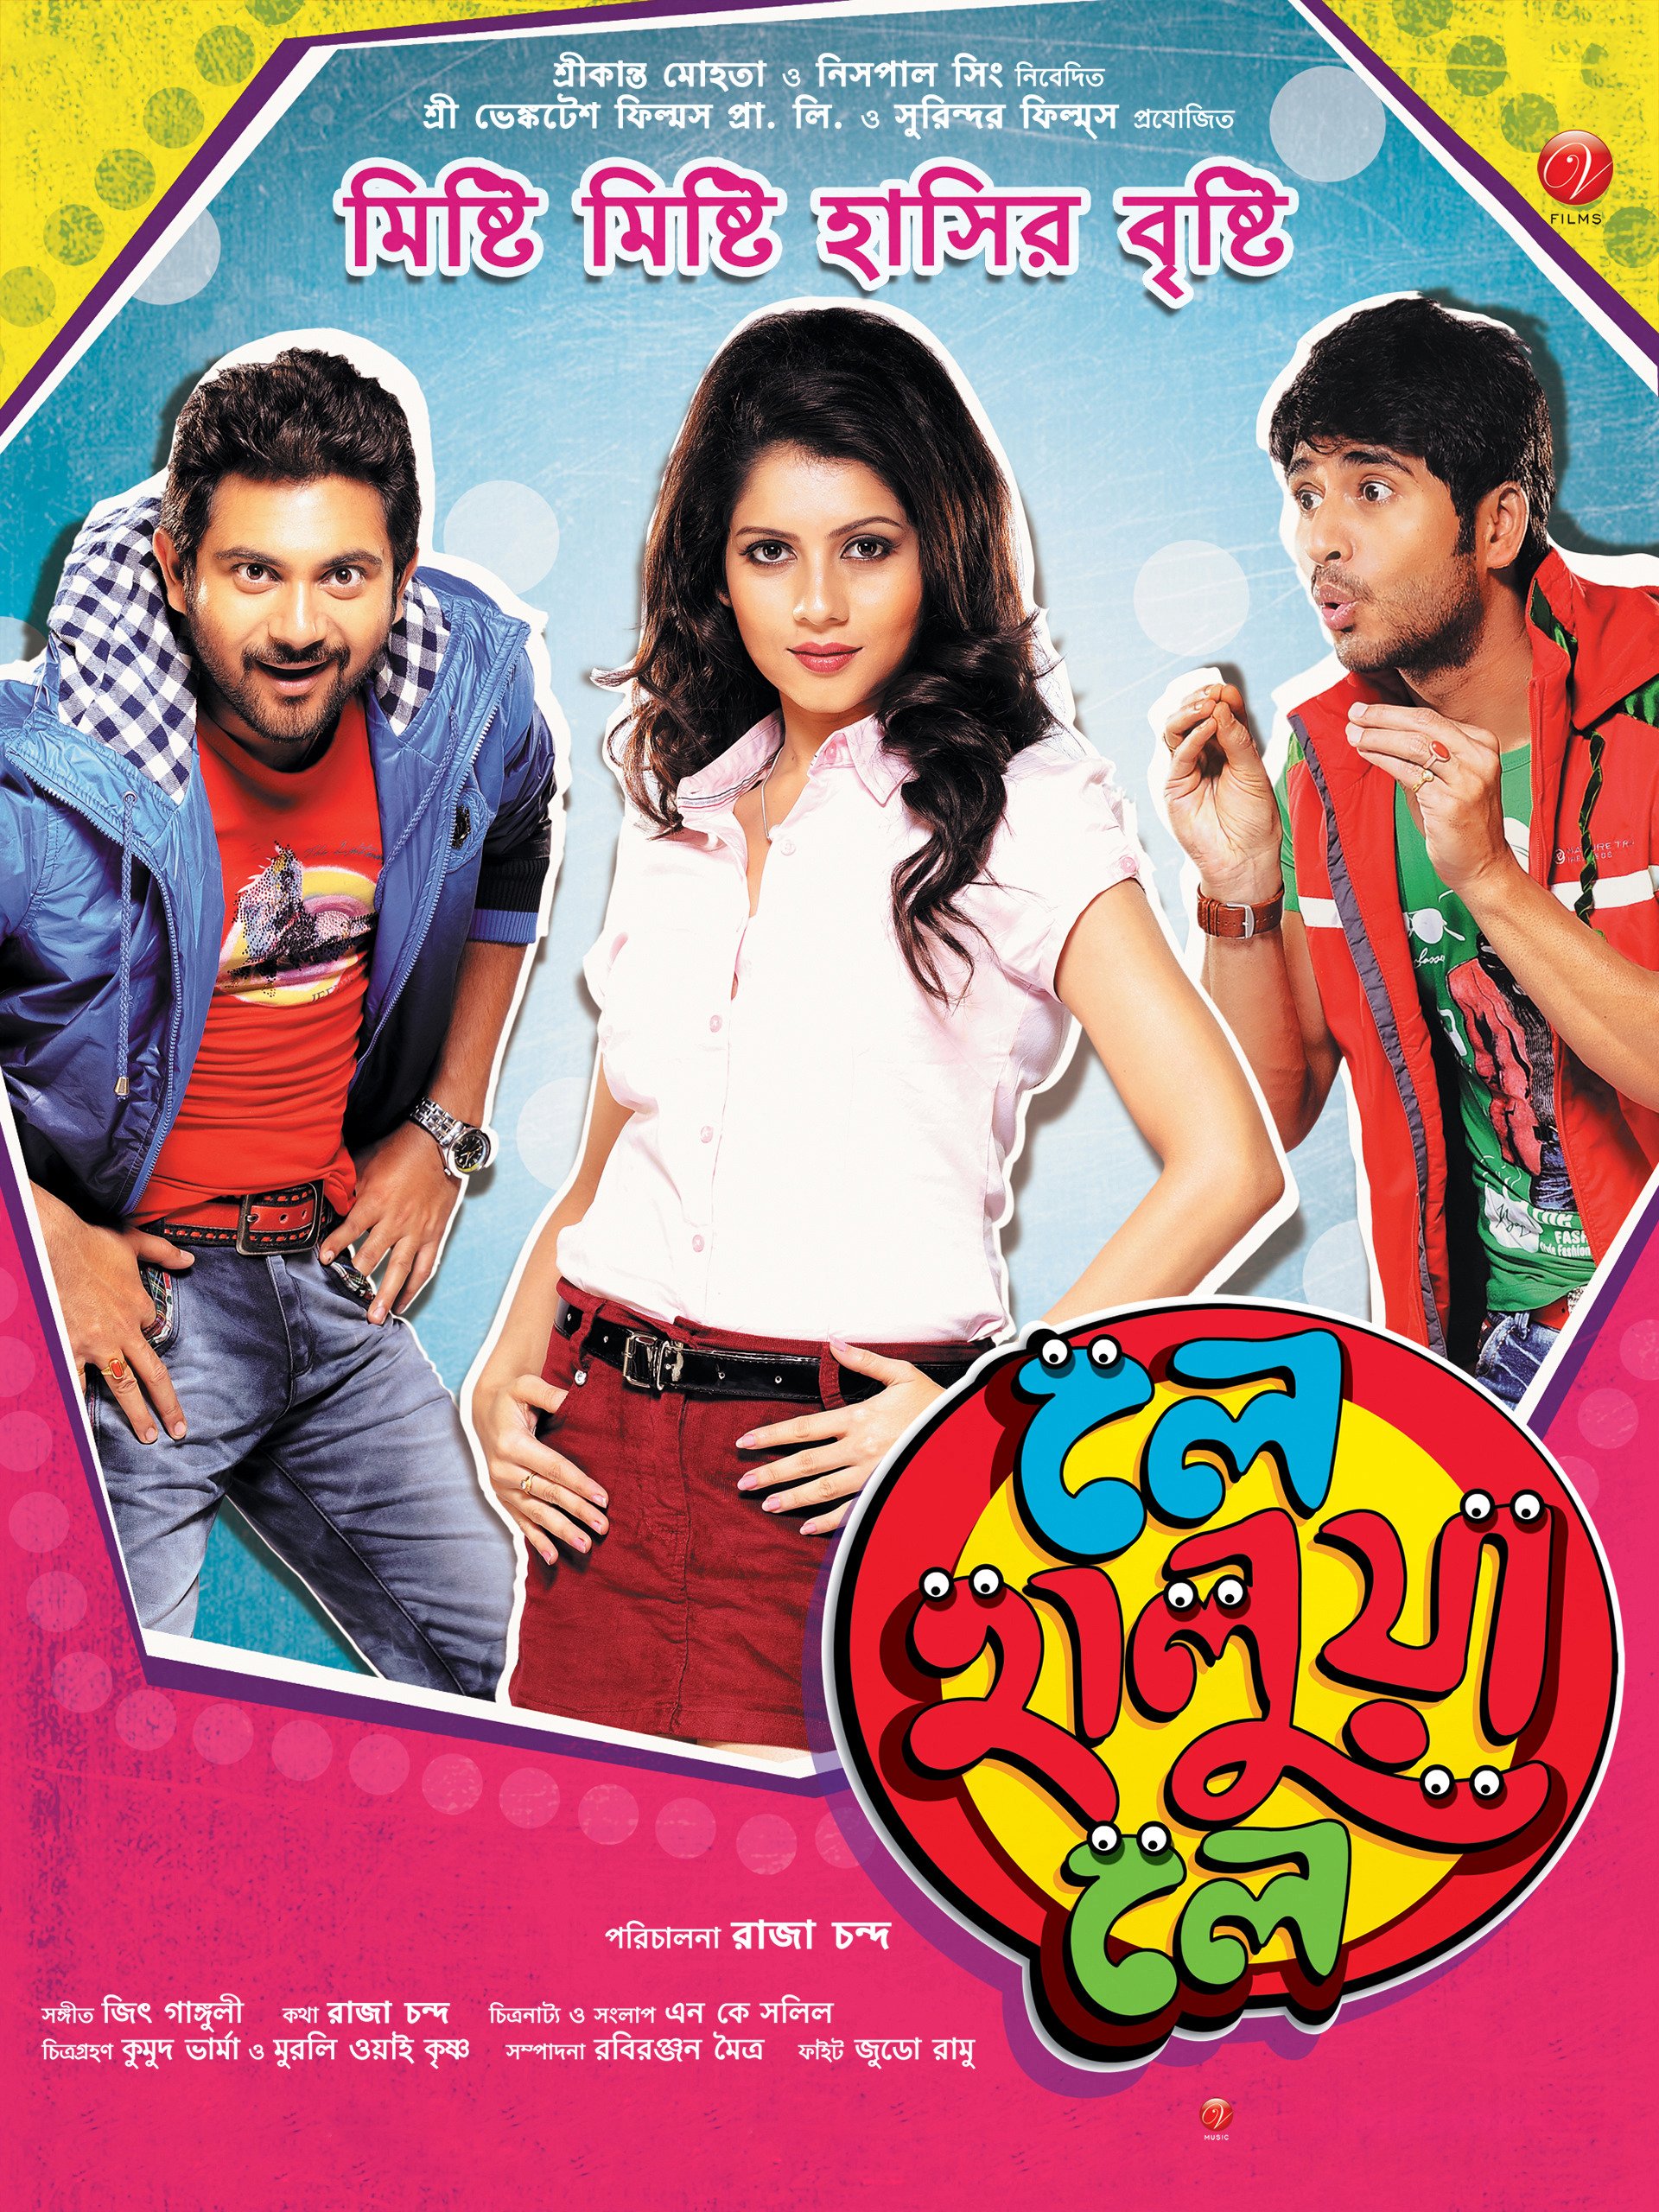 Le Halua Le Bengali Full Movie Download 720p